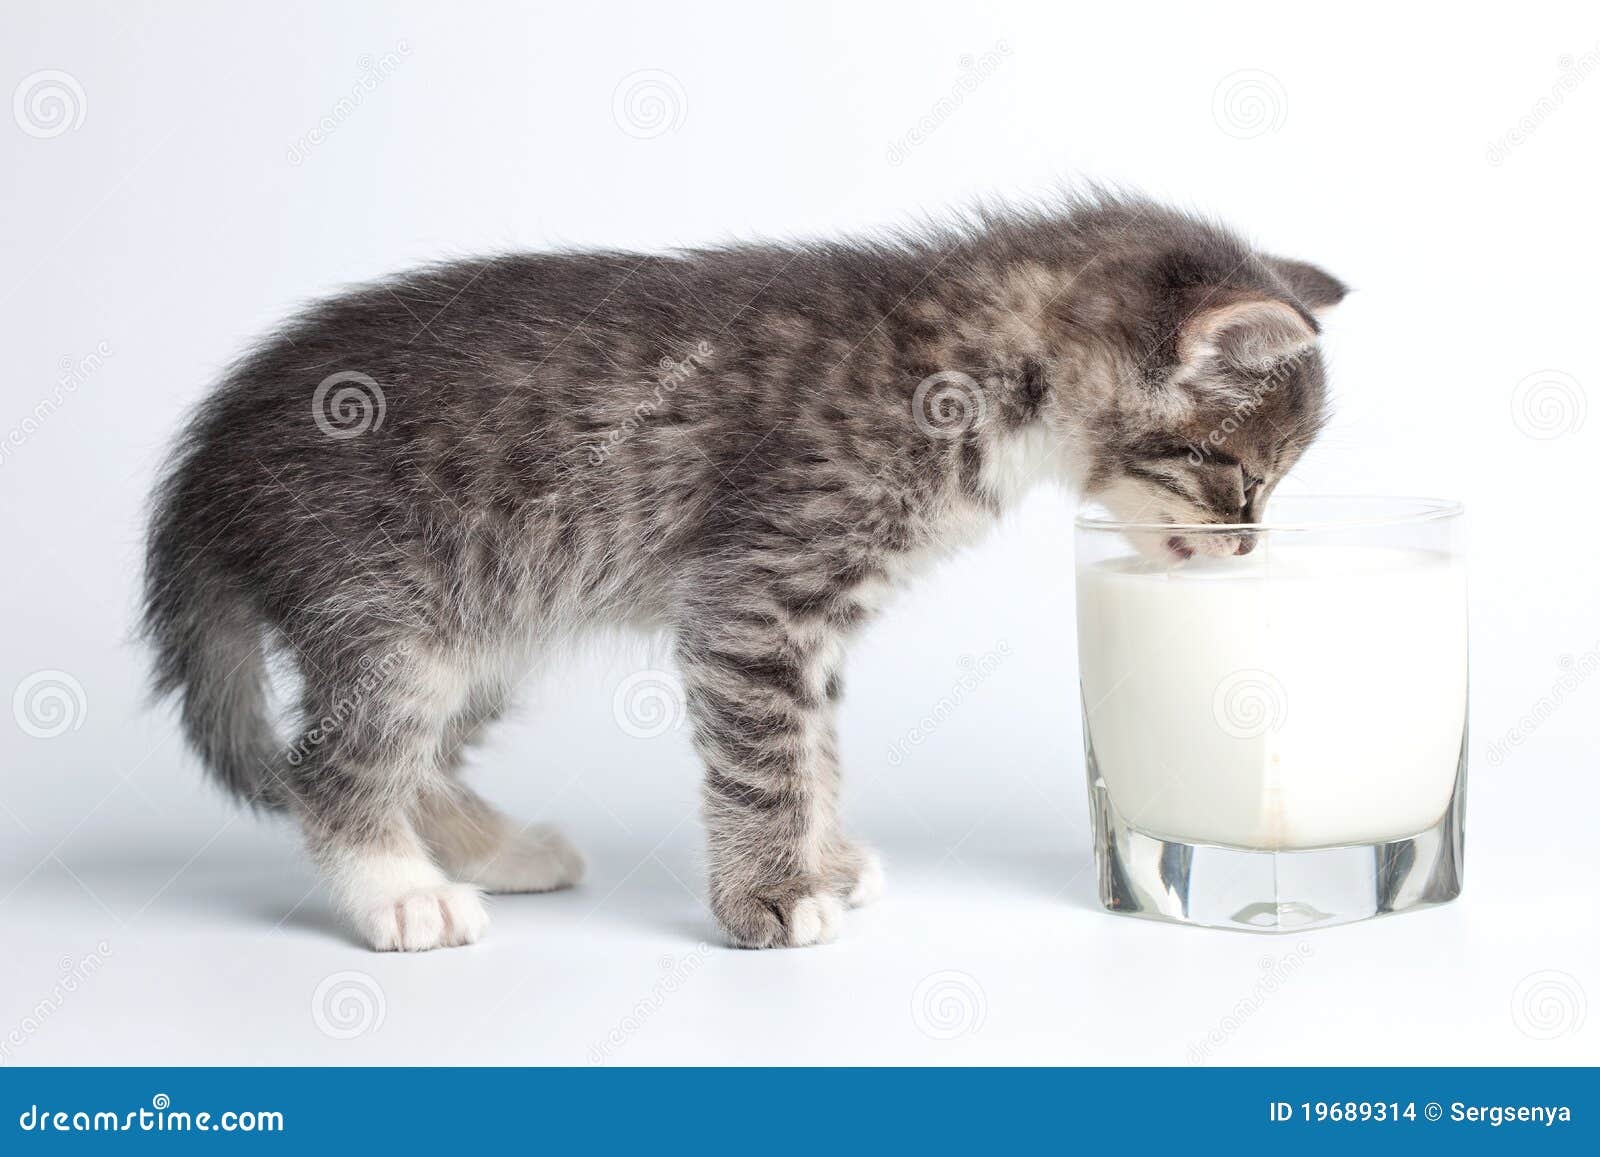 gray-kitten-drinking-milk-cup-19689314.jpg